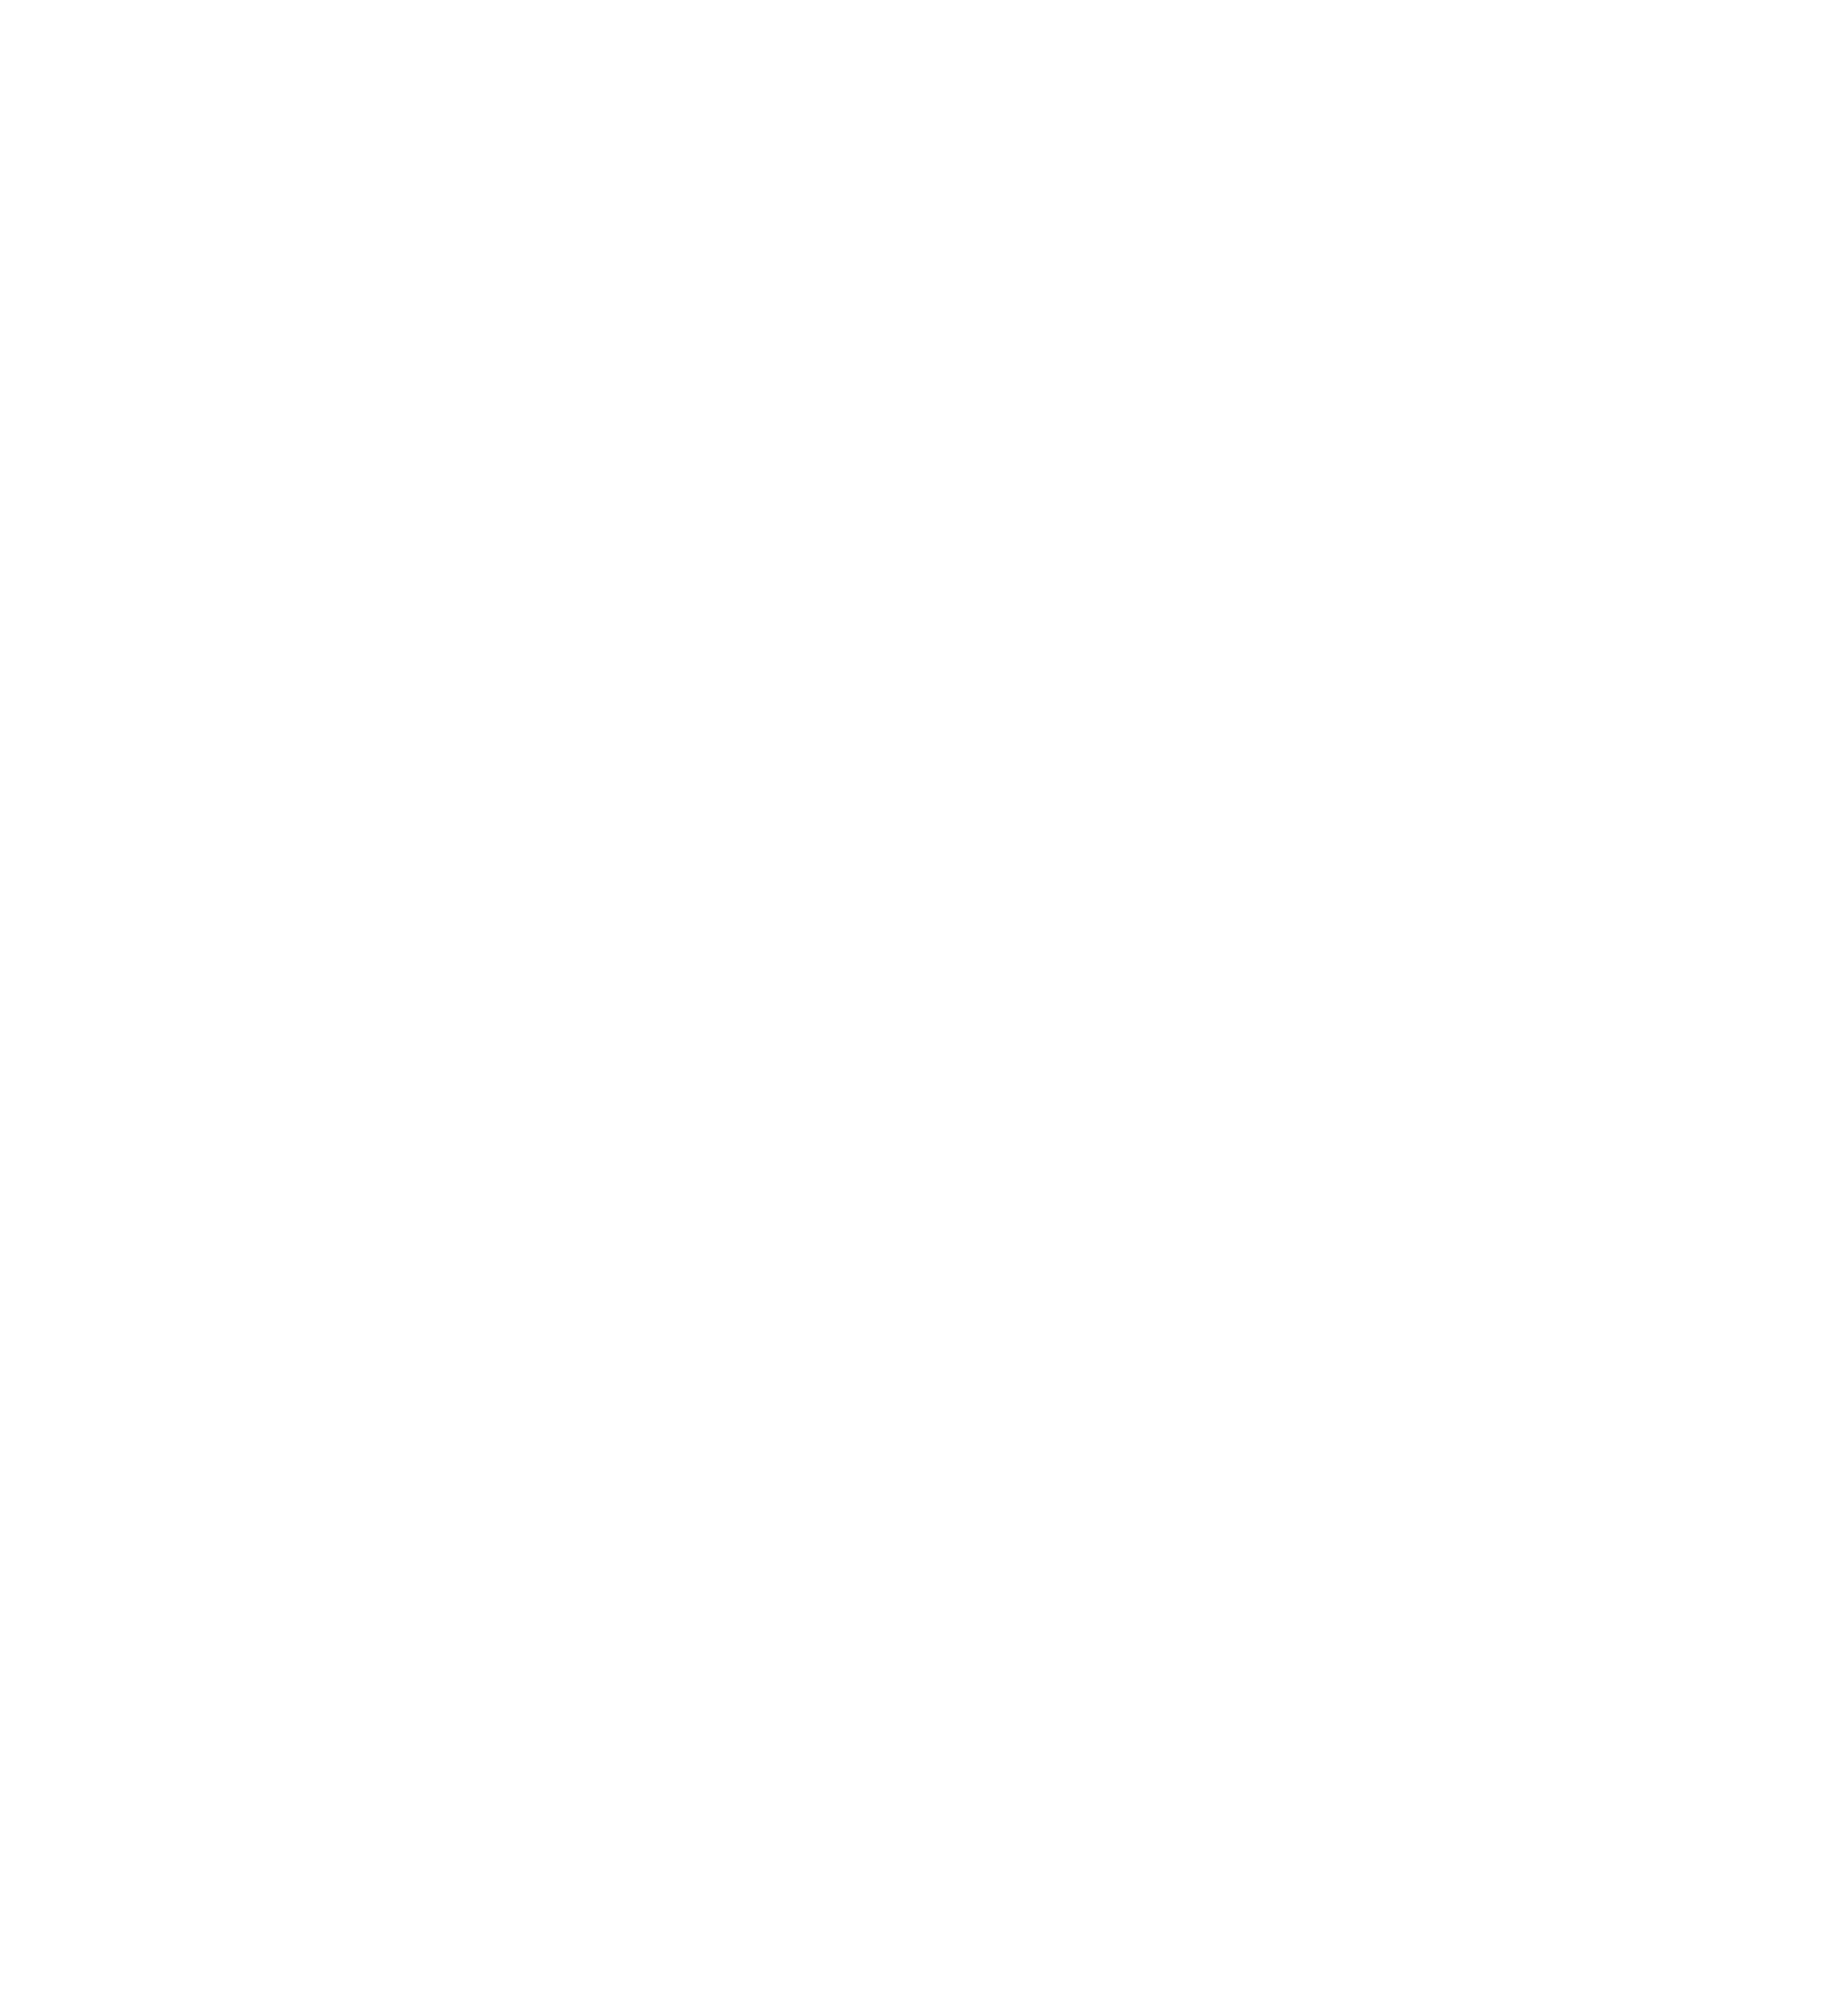 Diamond Wochen